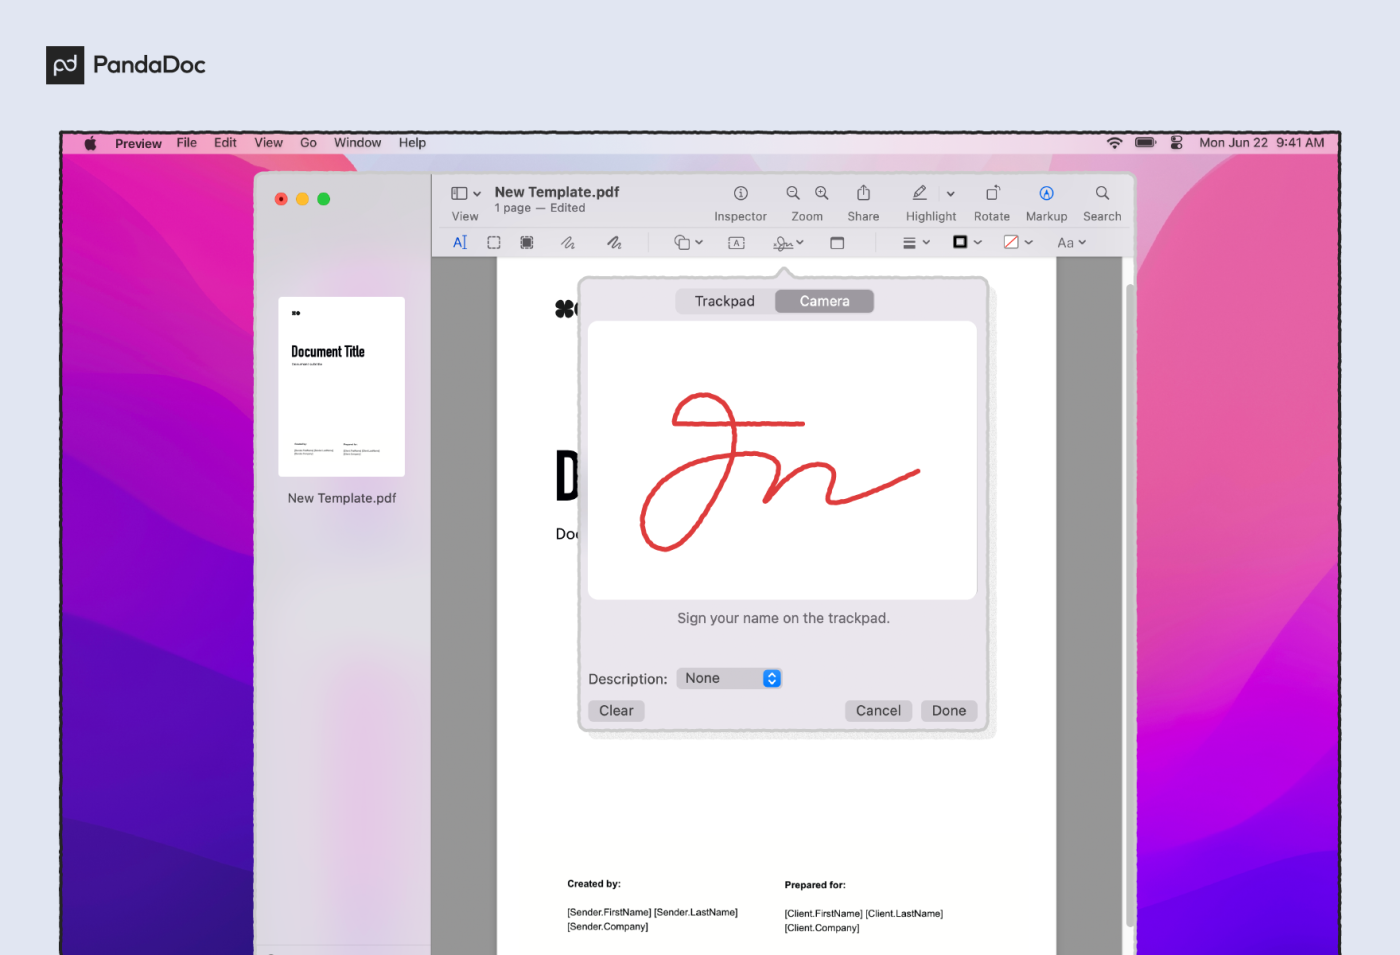 Screenshot of using Mac’s camera for a signature